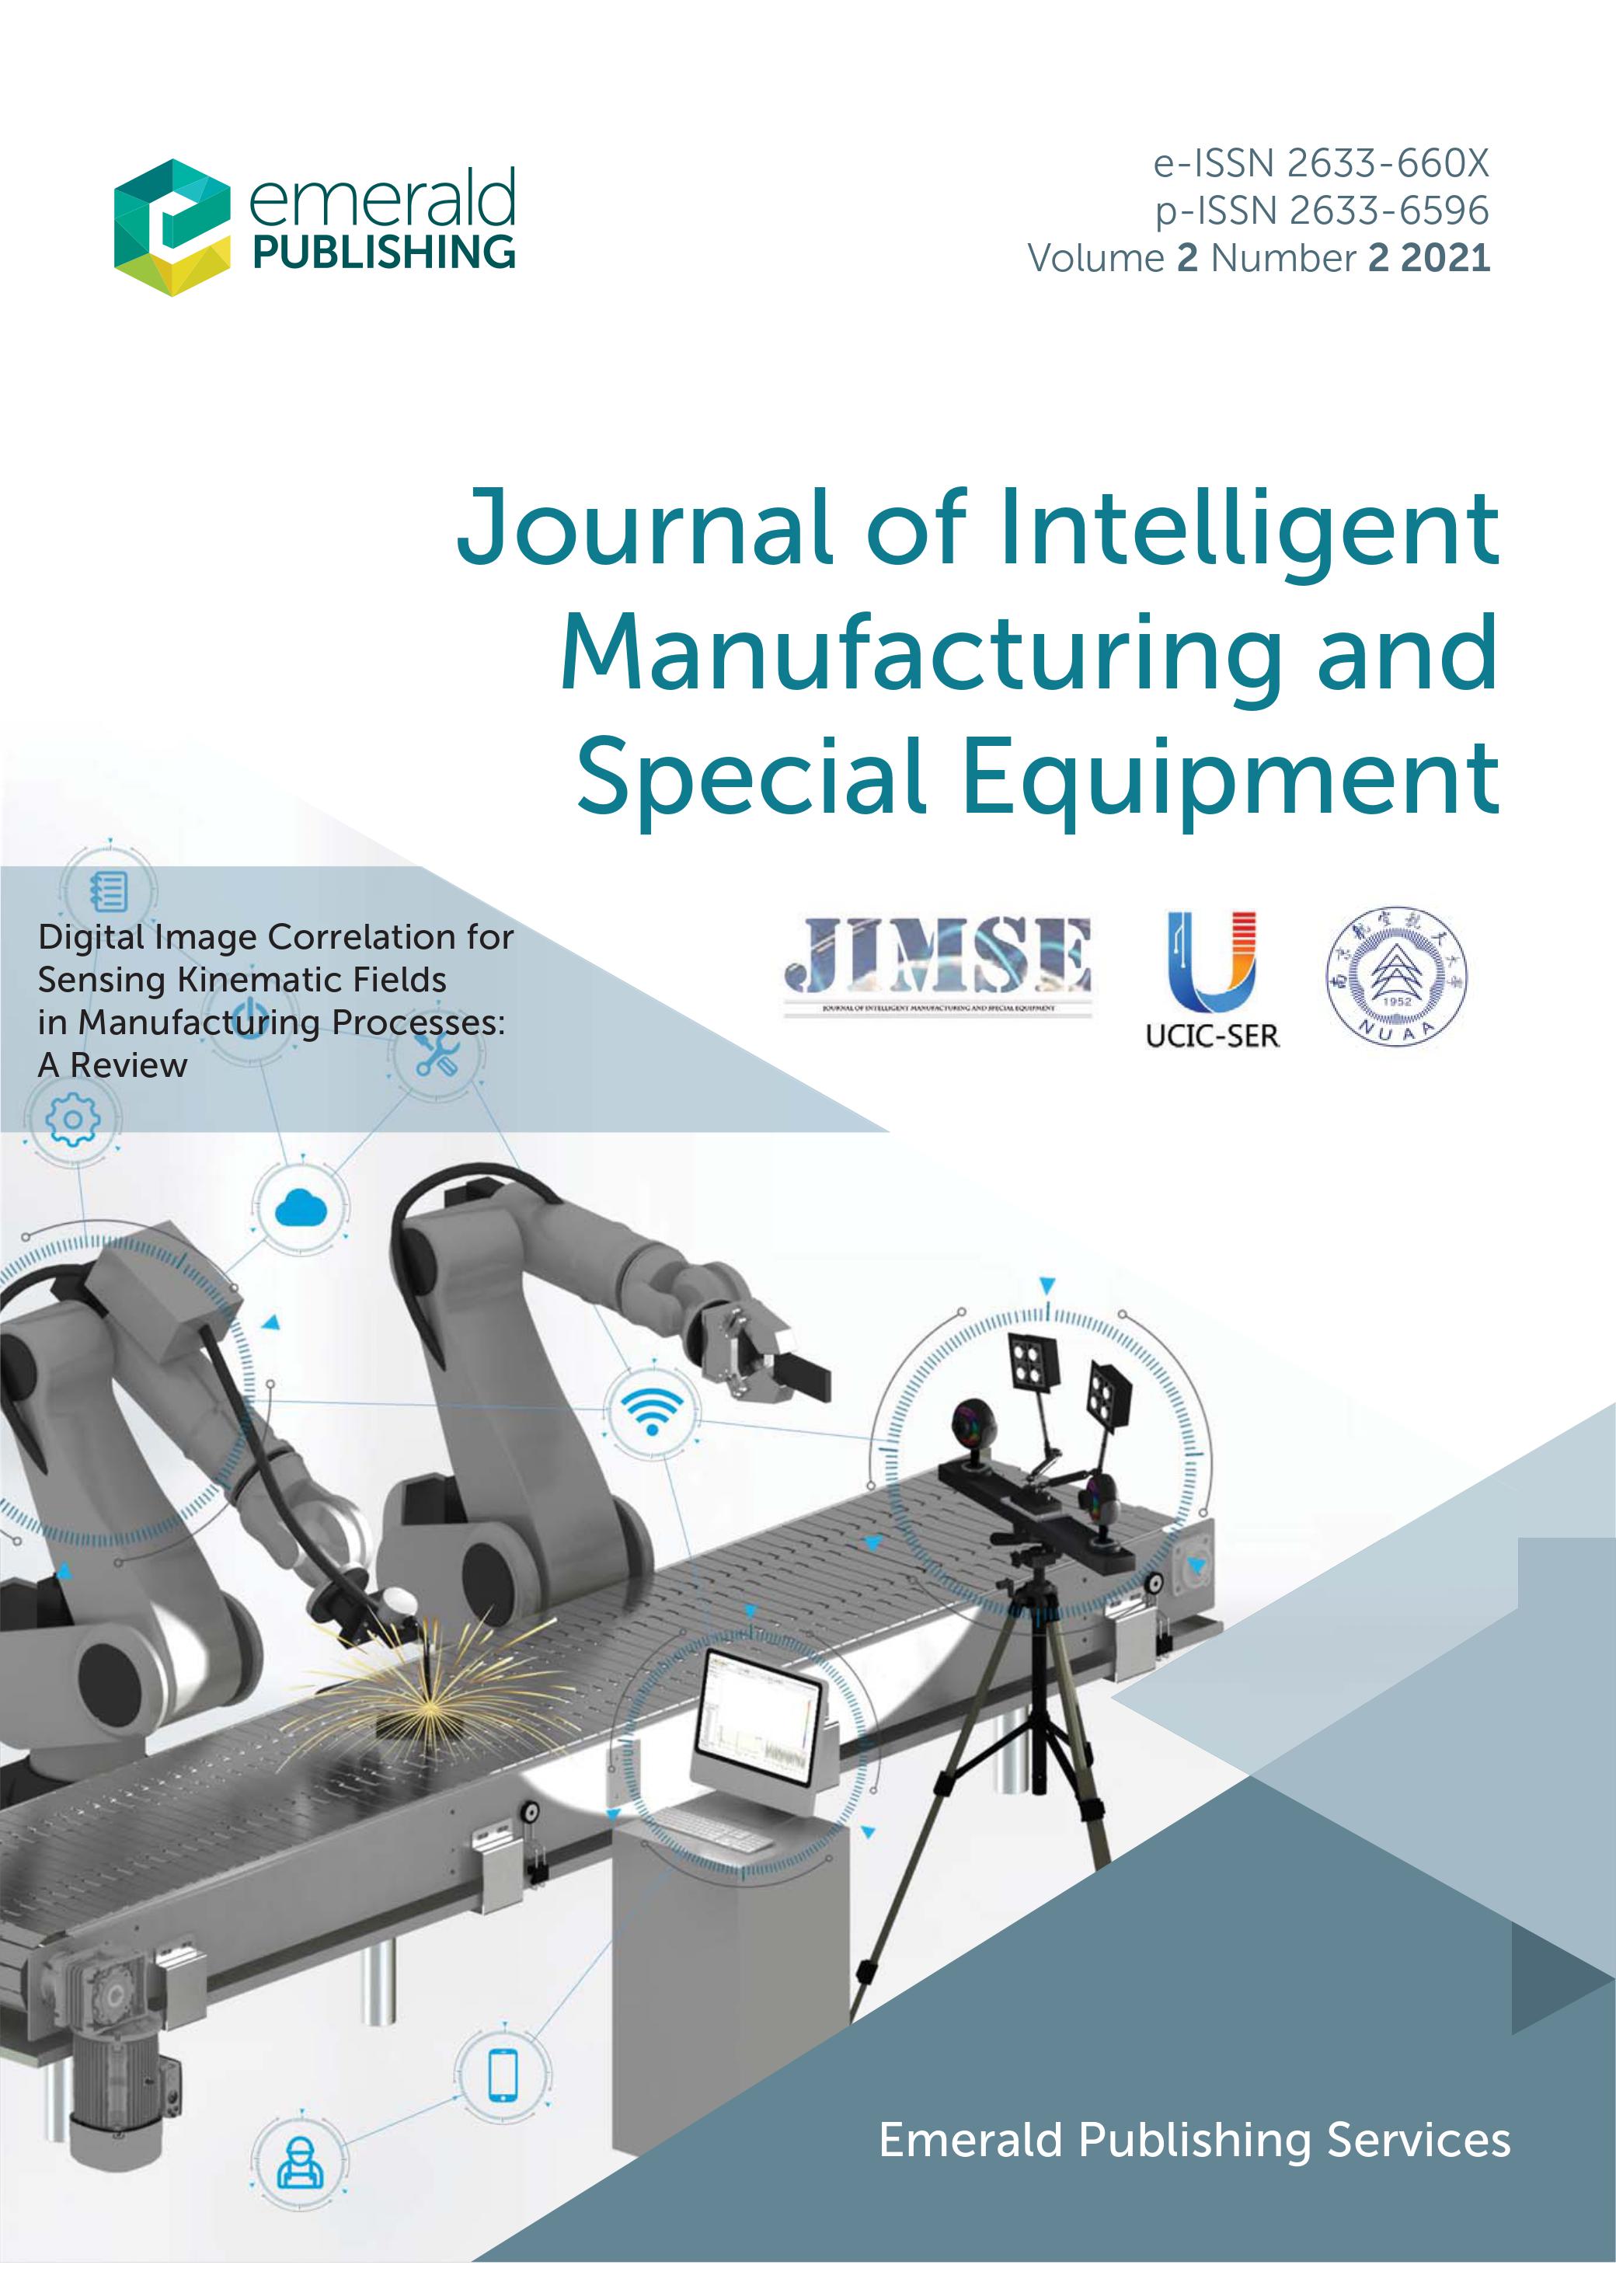 Industrial Robot | Emerald Publishing